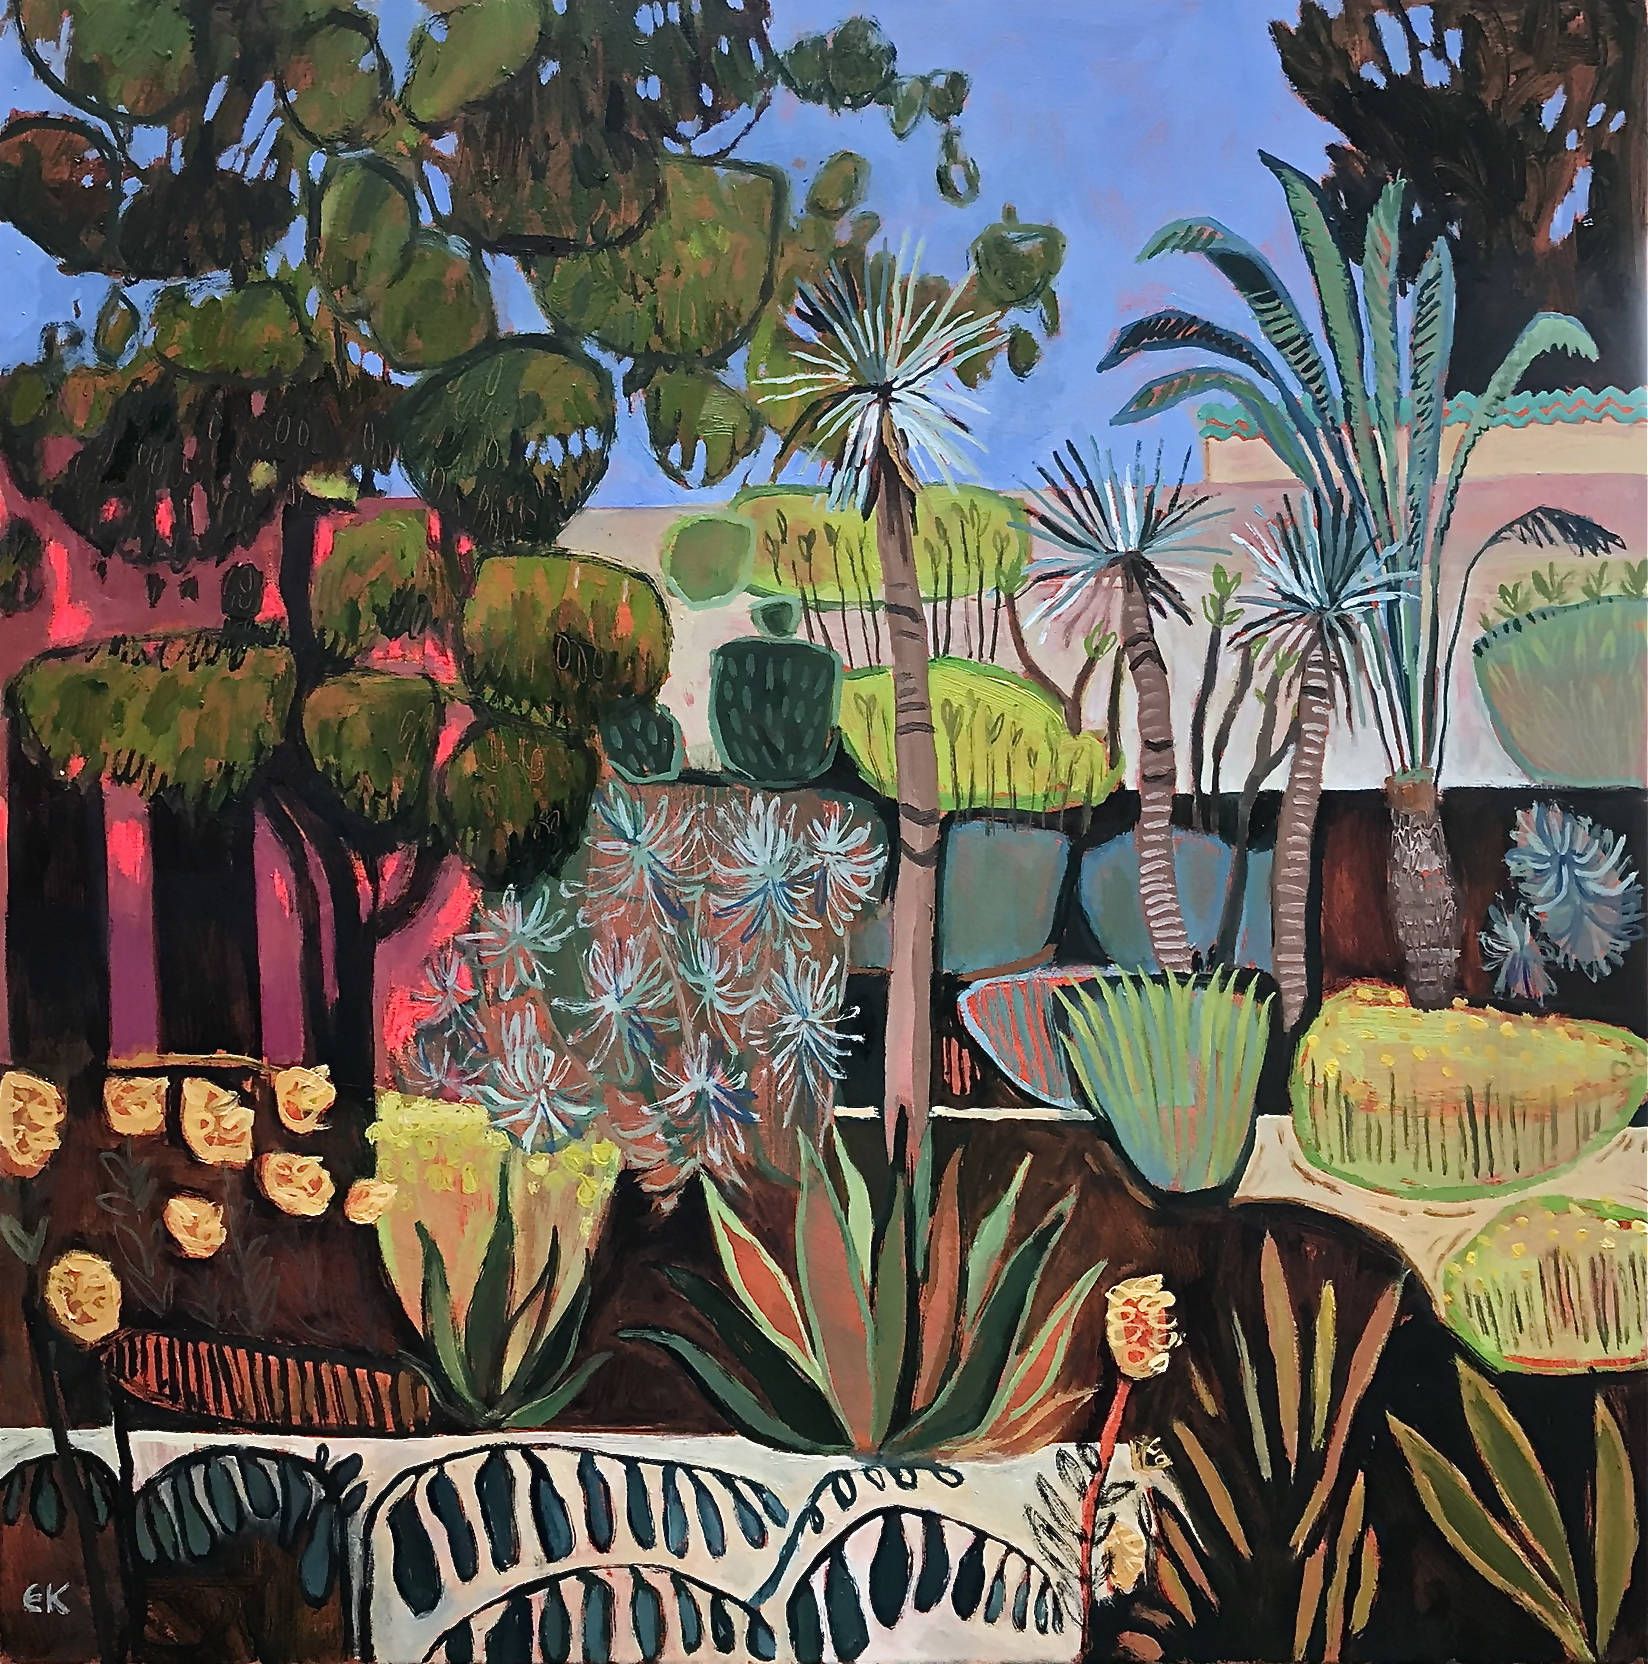 Le Jardin Secret with Date Palms and Bright Wall, Marrakech by Elaine Kazimierczuk